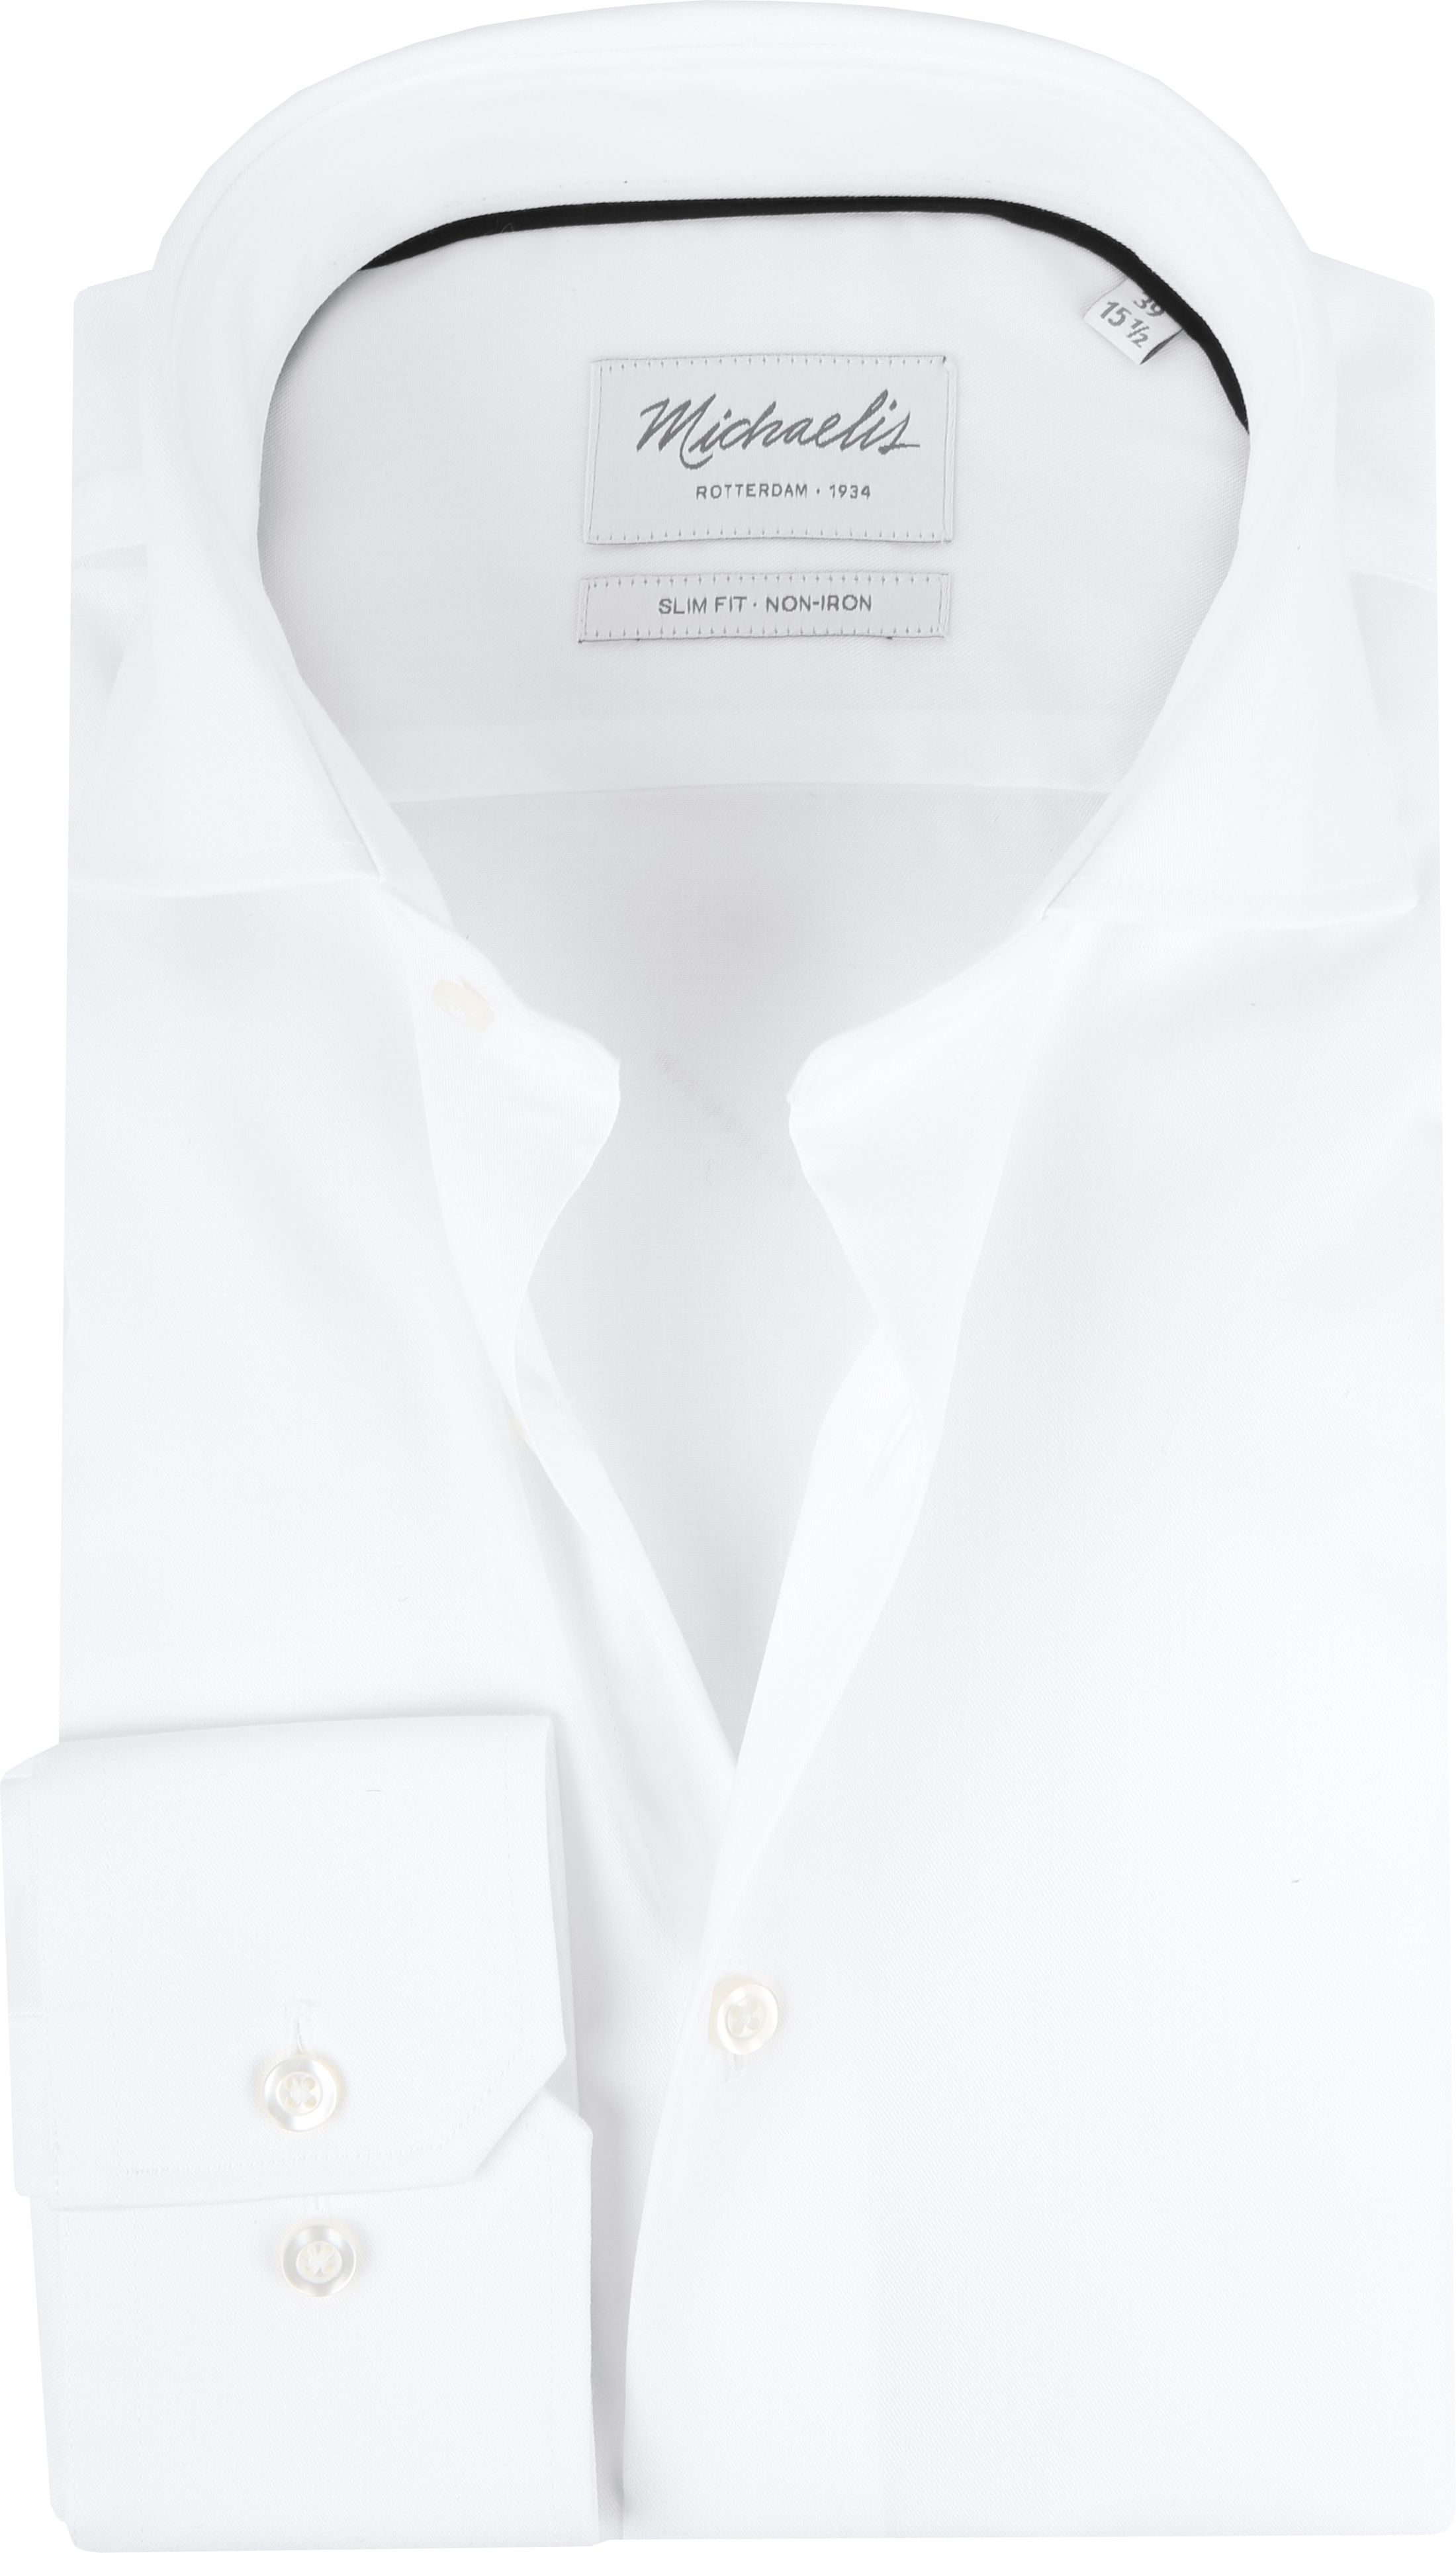 Michaelis Skinny Shirt White size 17 1/2